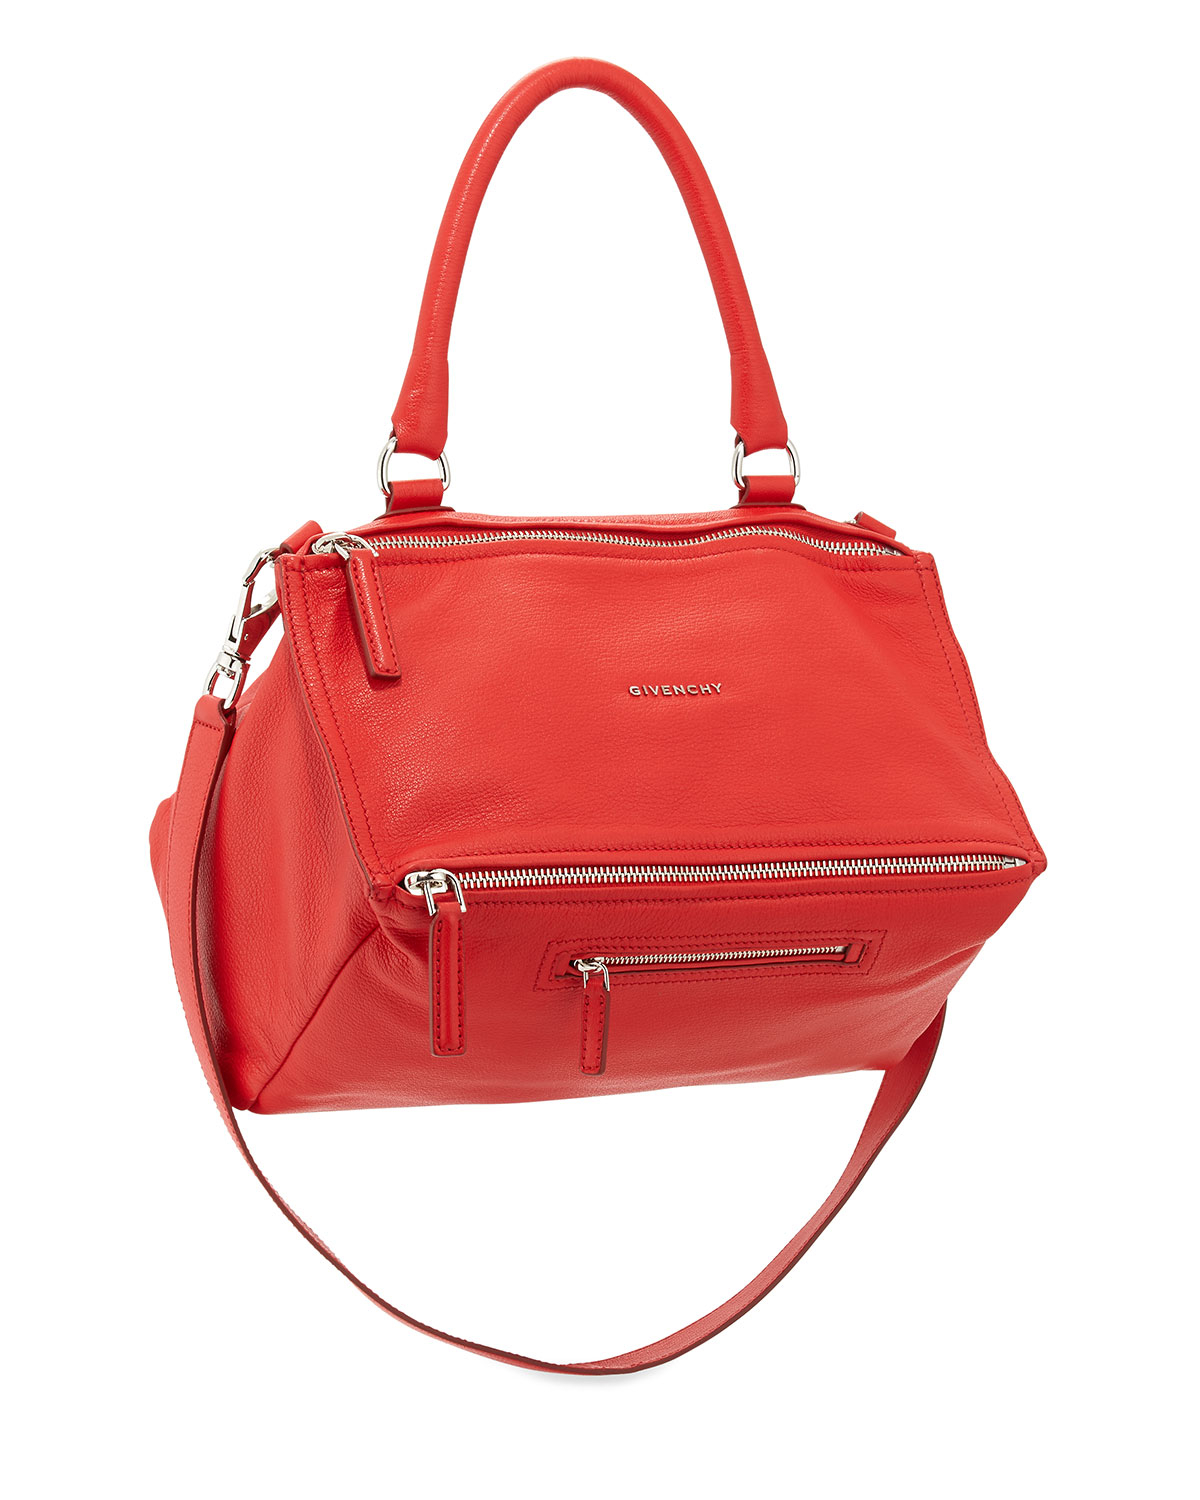 Givenchy Pandora Medium Sugar Leather Satchel Bag in Red | Lyst